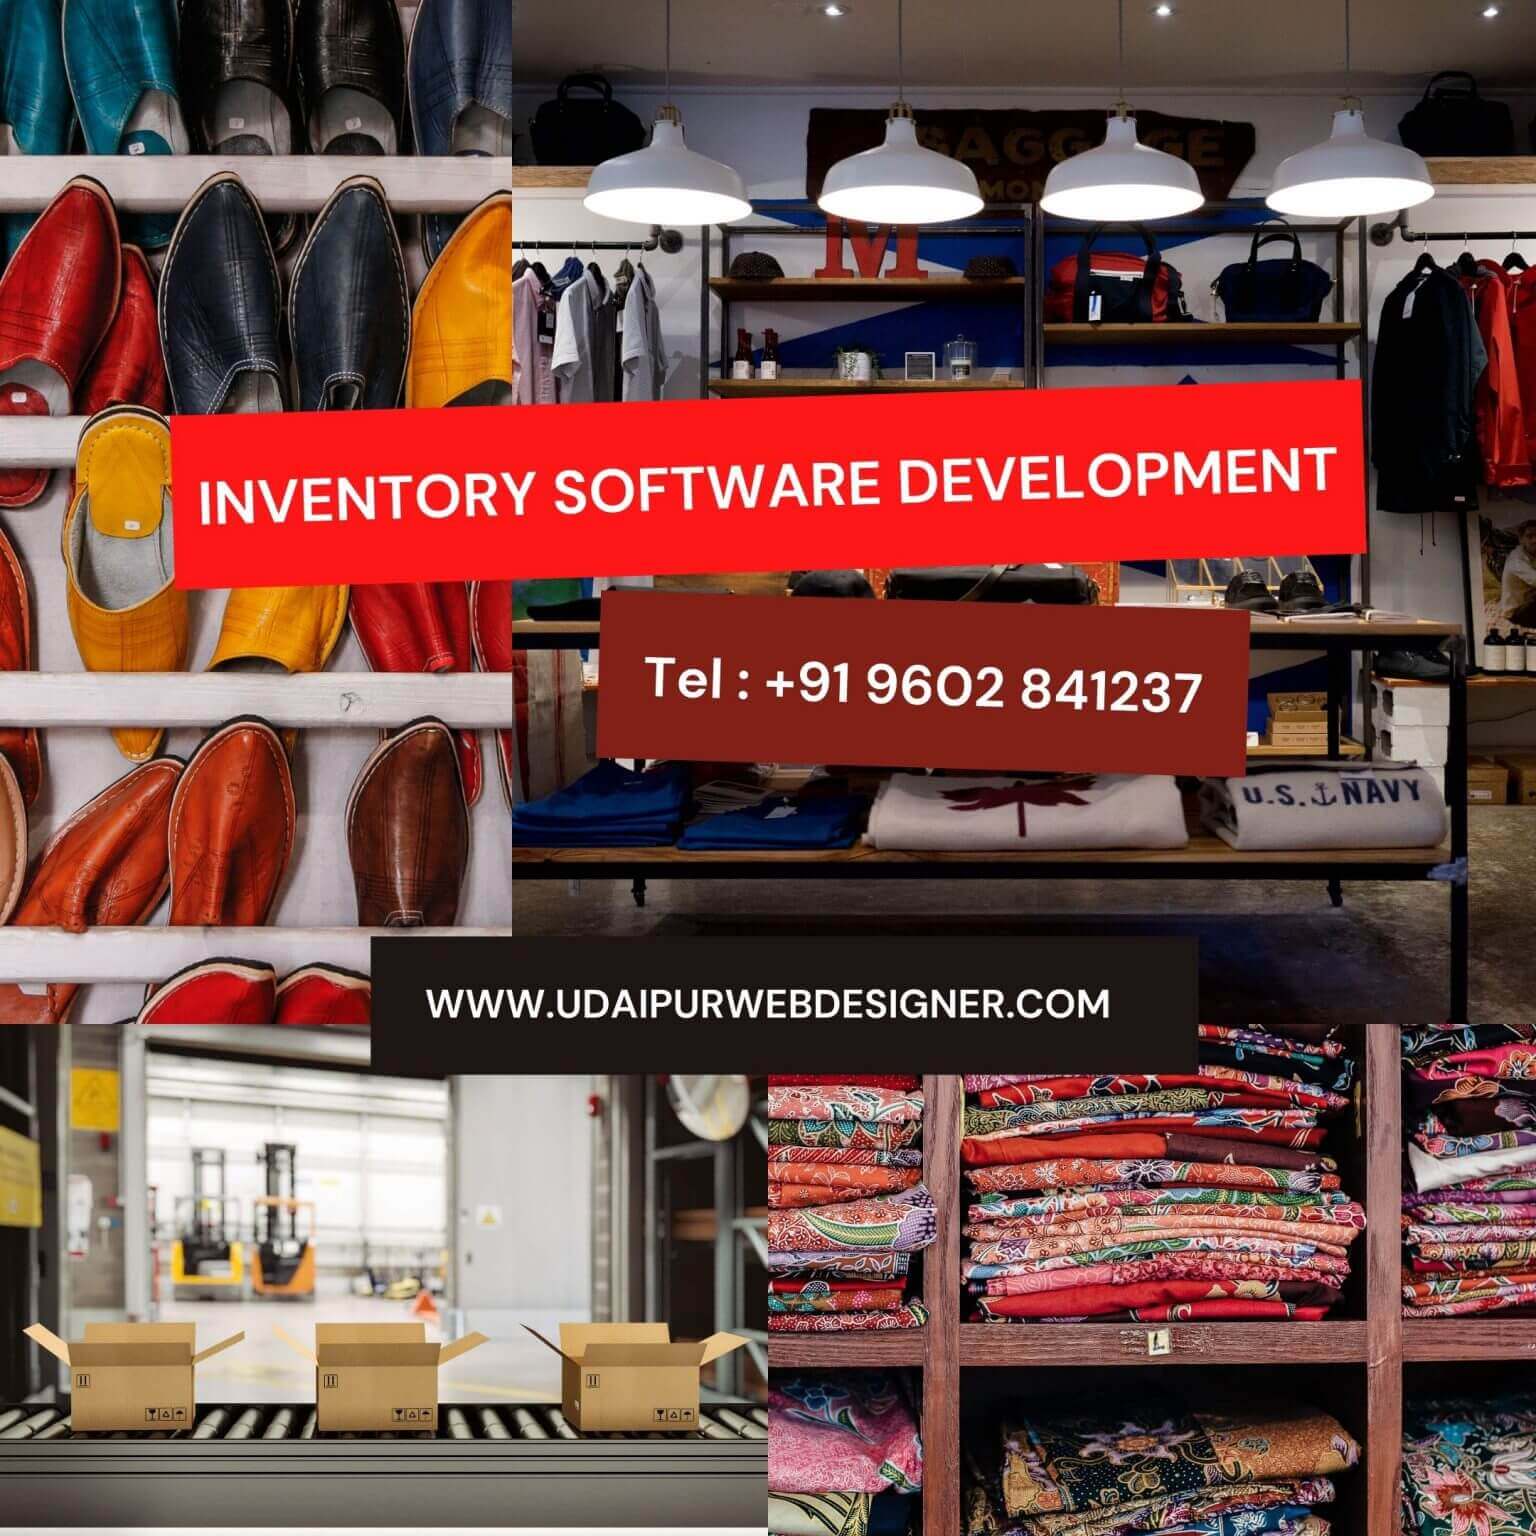 Inventory-Software-Development-Udaipur-1536×1536